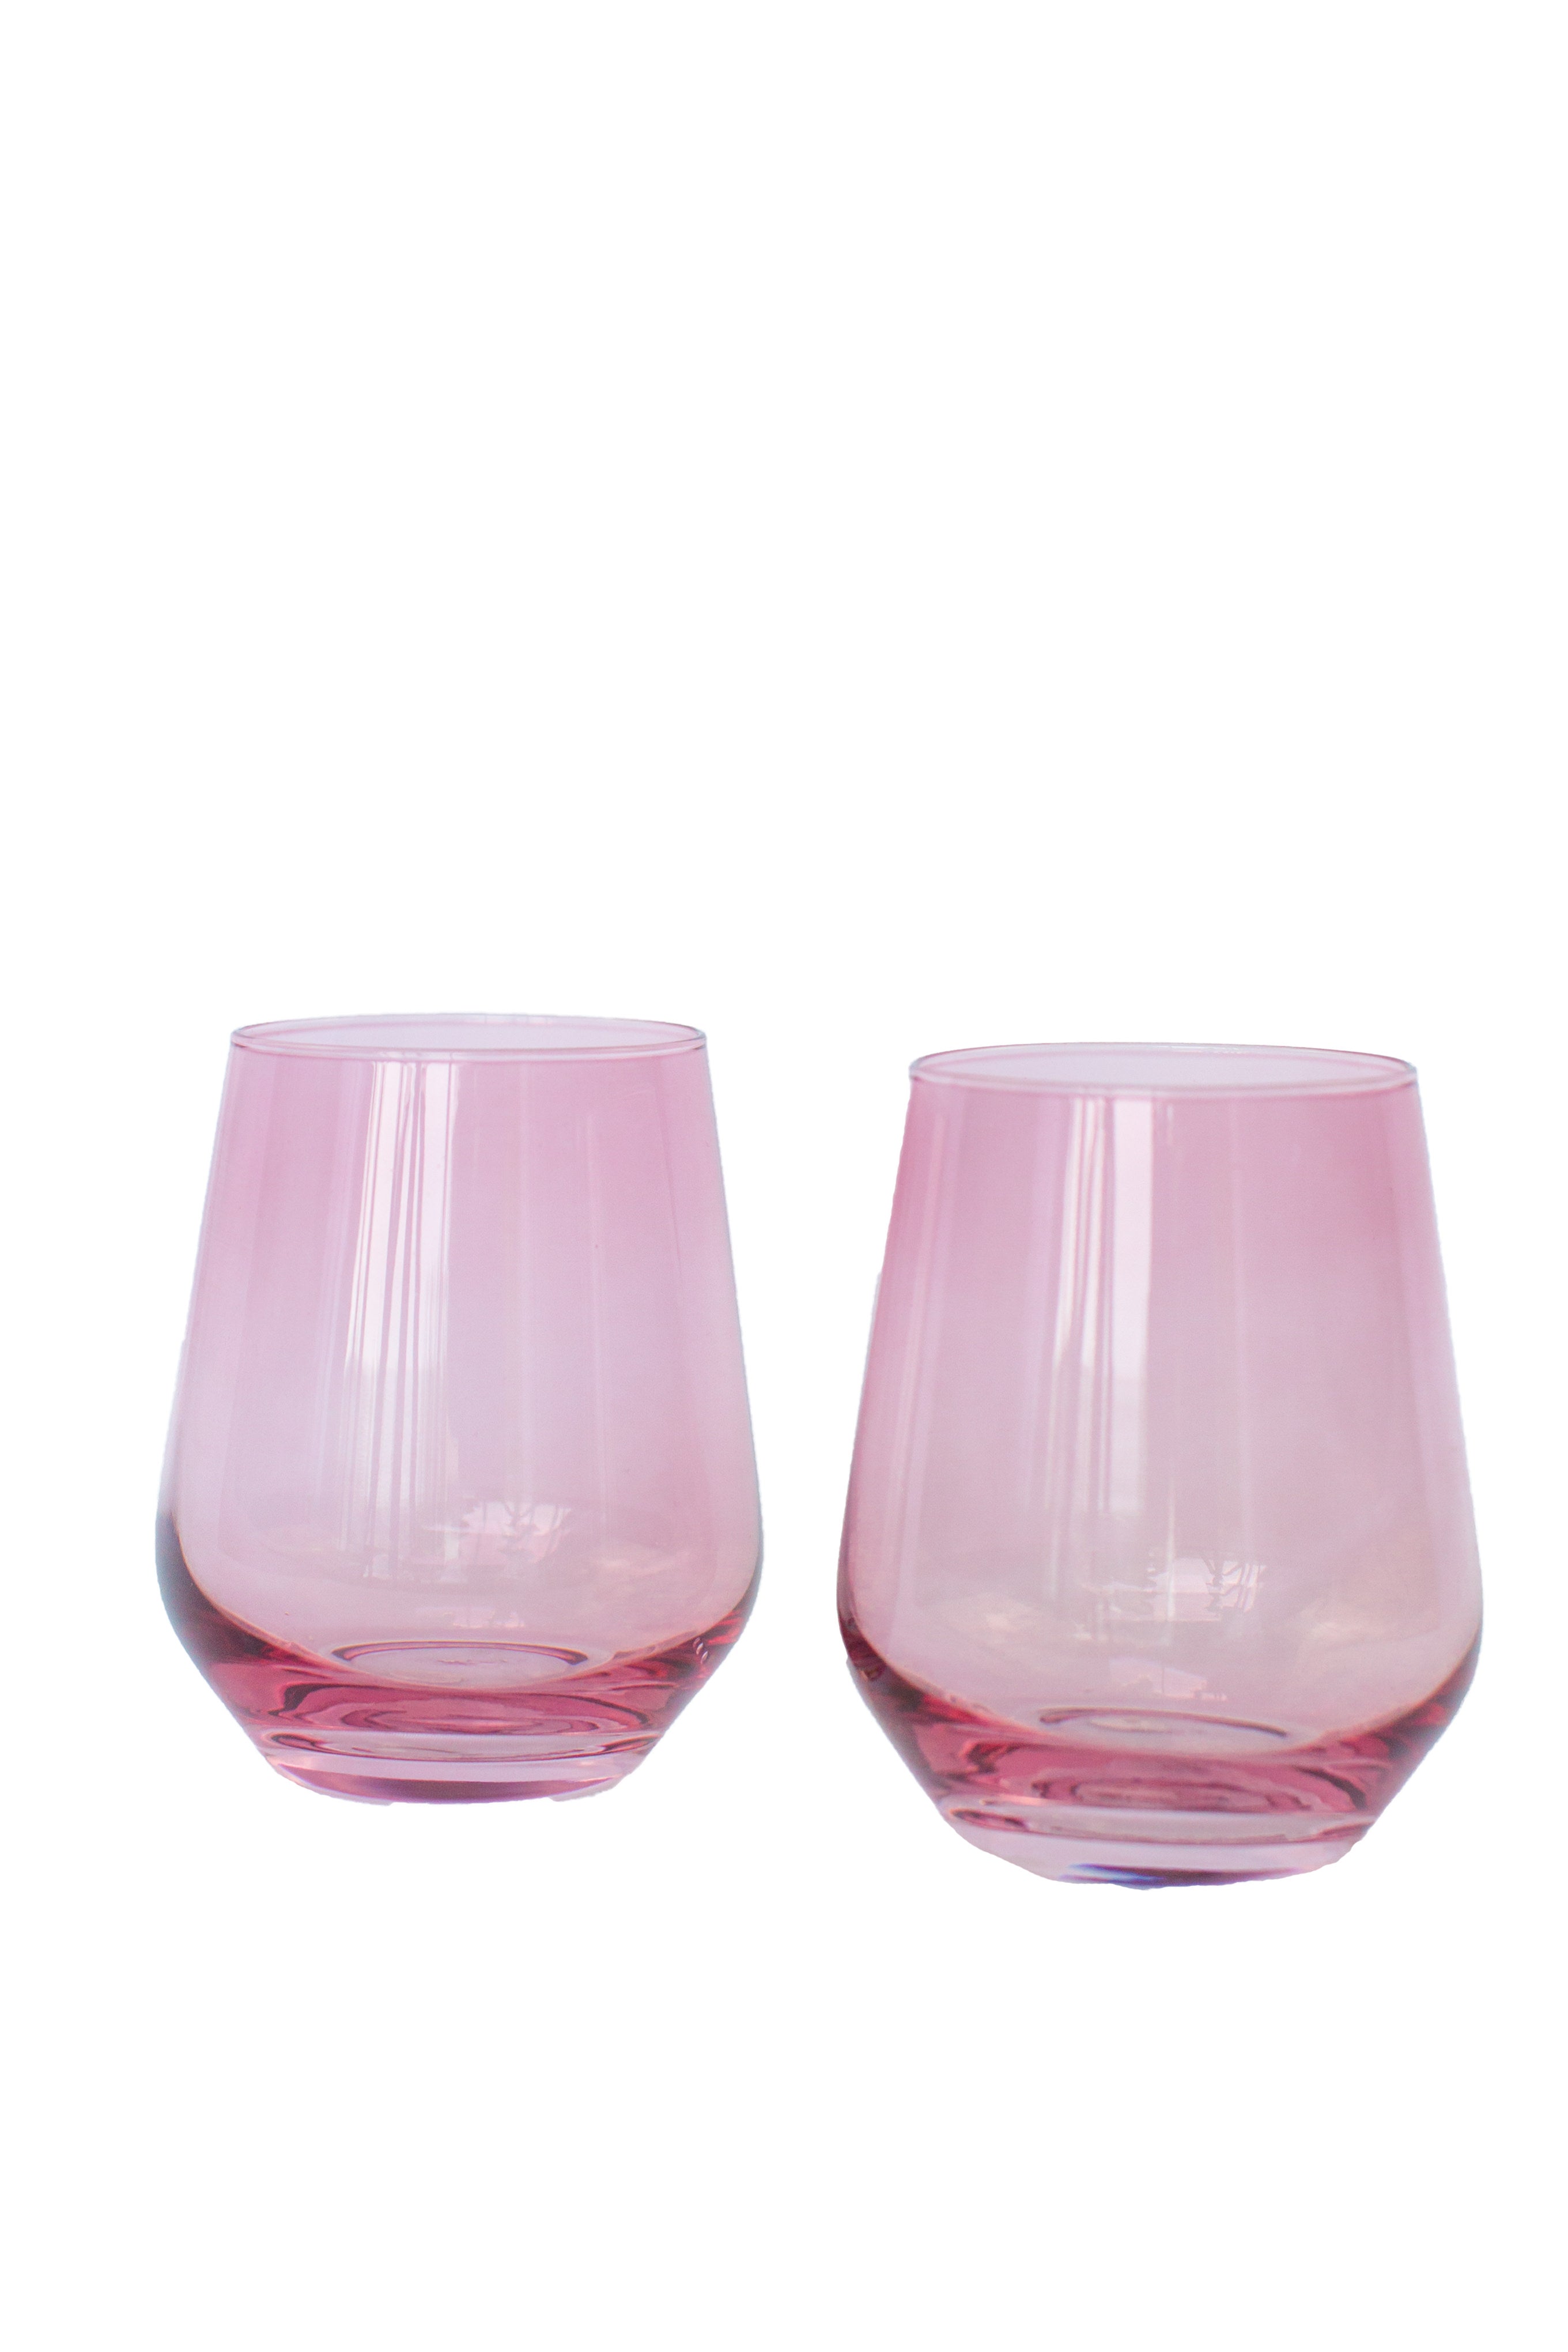 Estelle Colored Wine Stemless - Set of 6 {Rose}